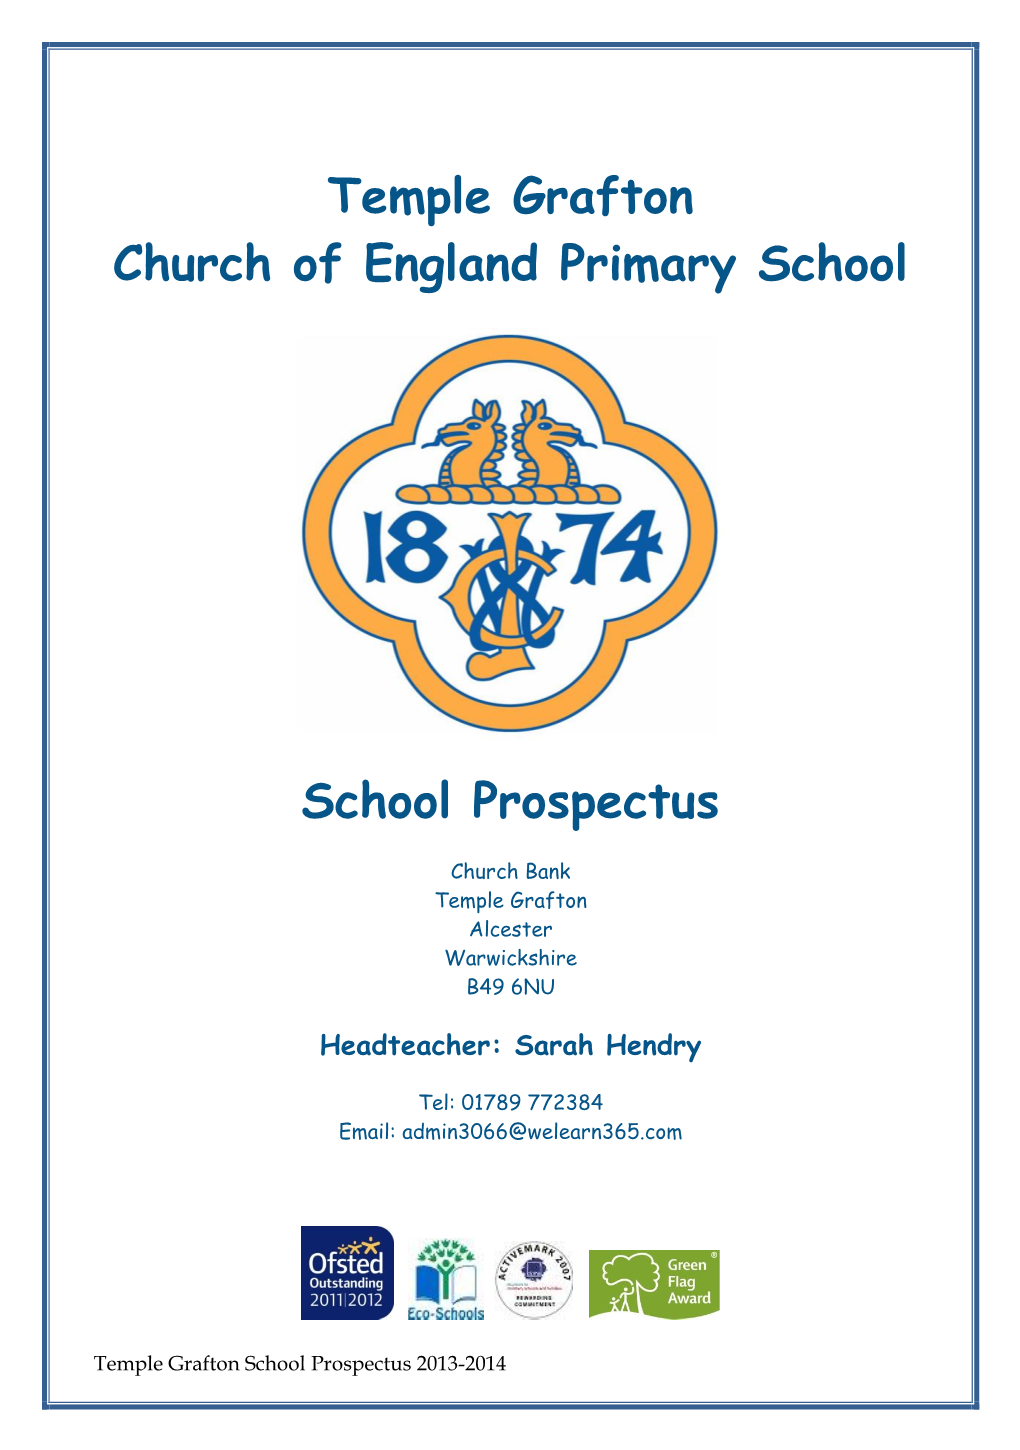 Temple Grafton Church of England Primary School School Prospectus